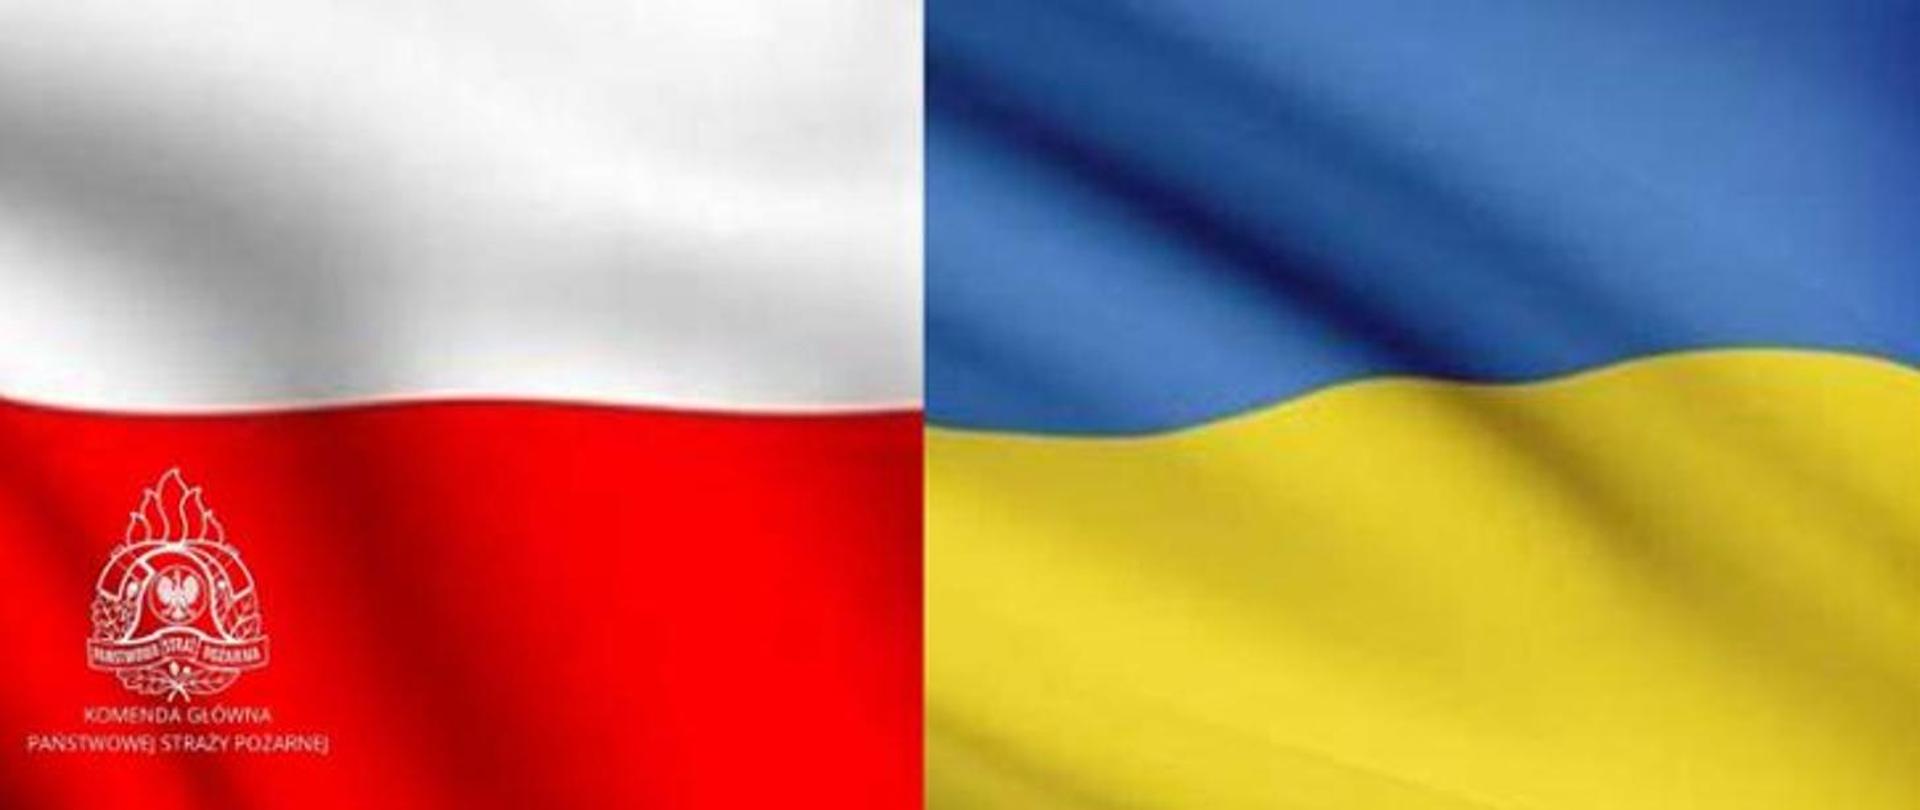 Flagi państwowe Polski i Ukrainy